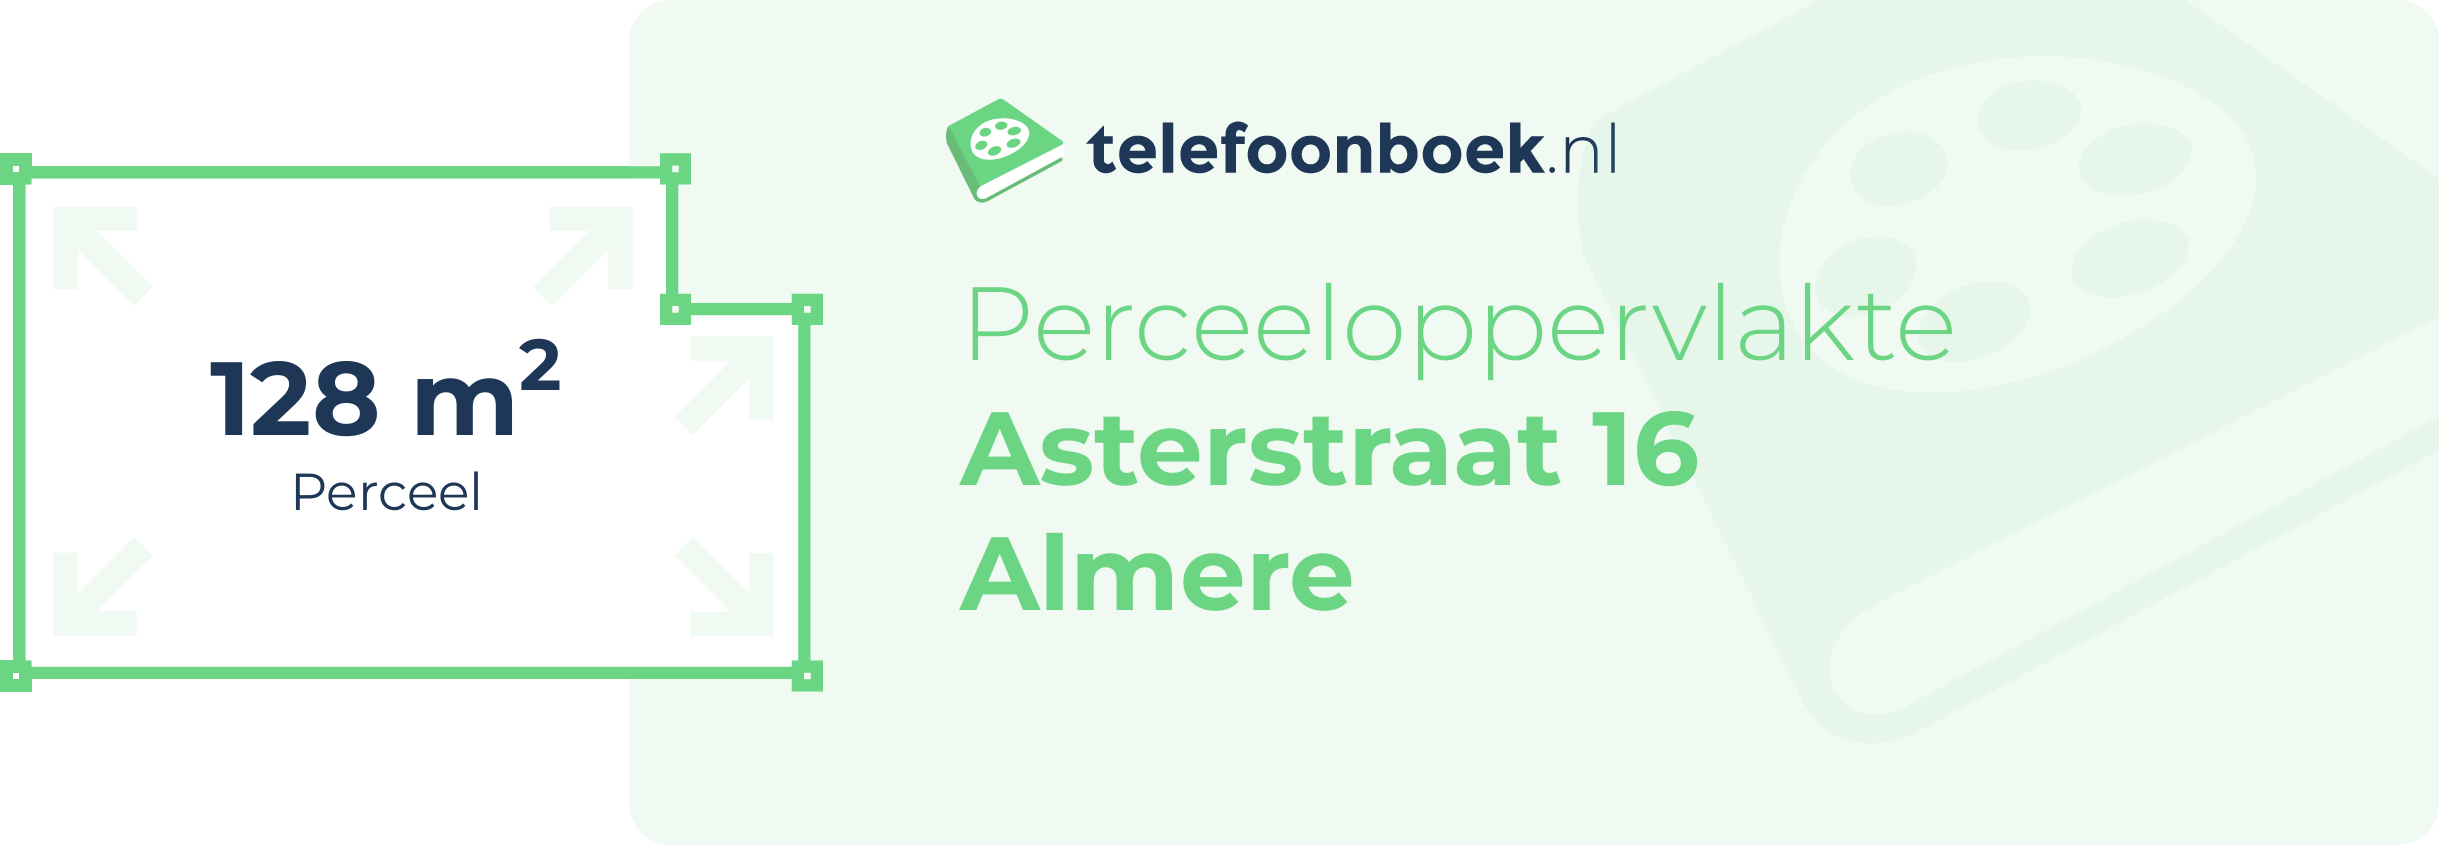 Perceeloppervlakte Asterstraat 16 Almere